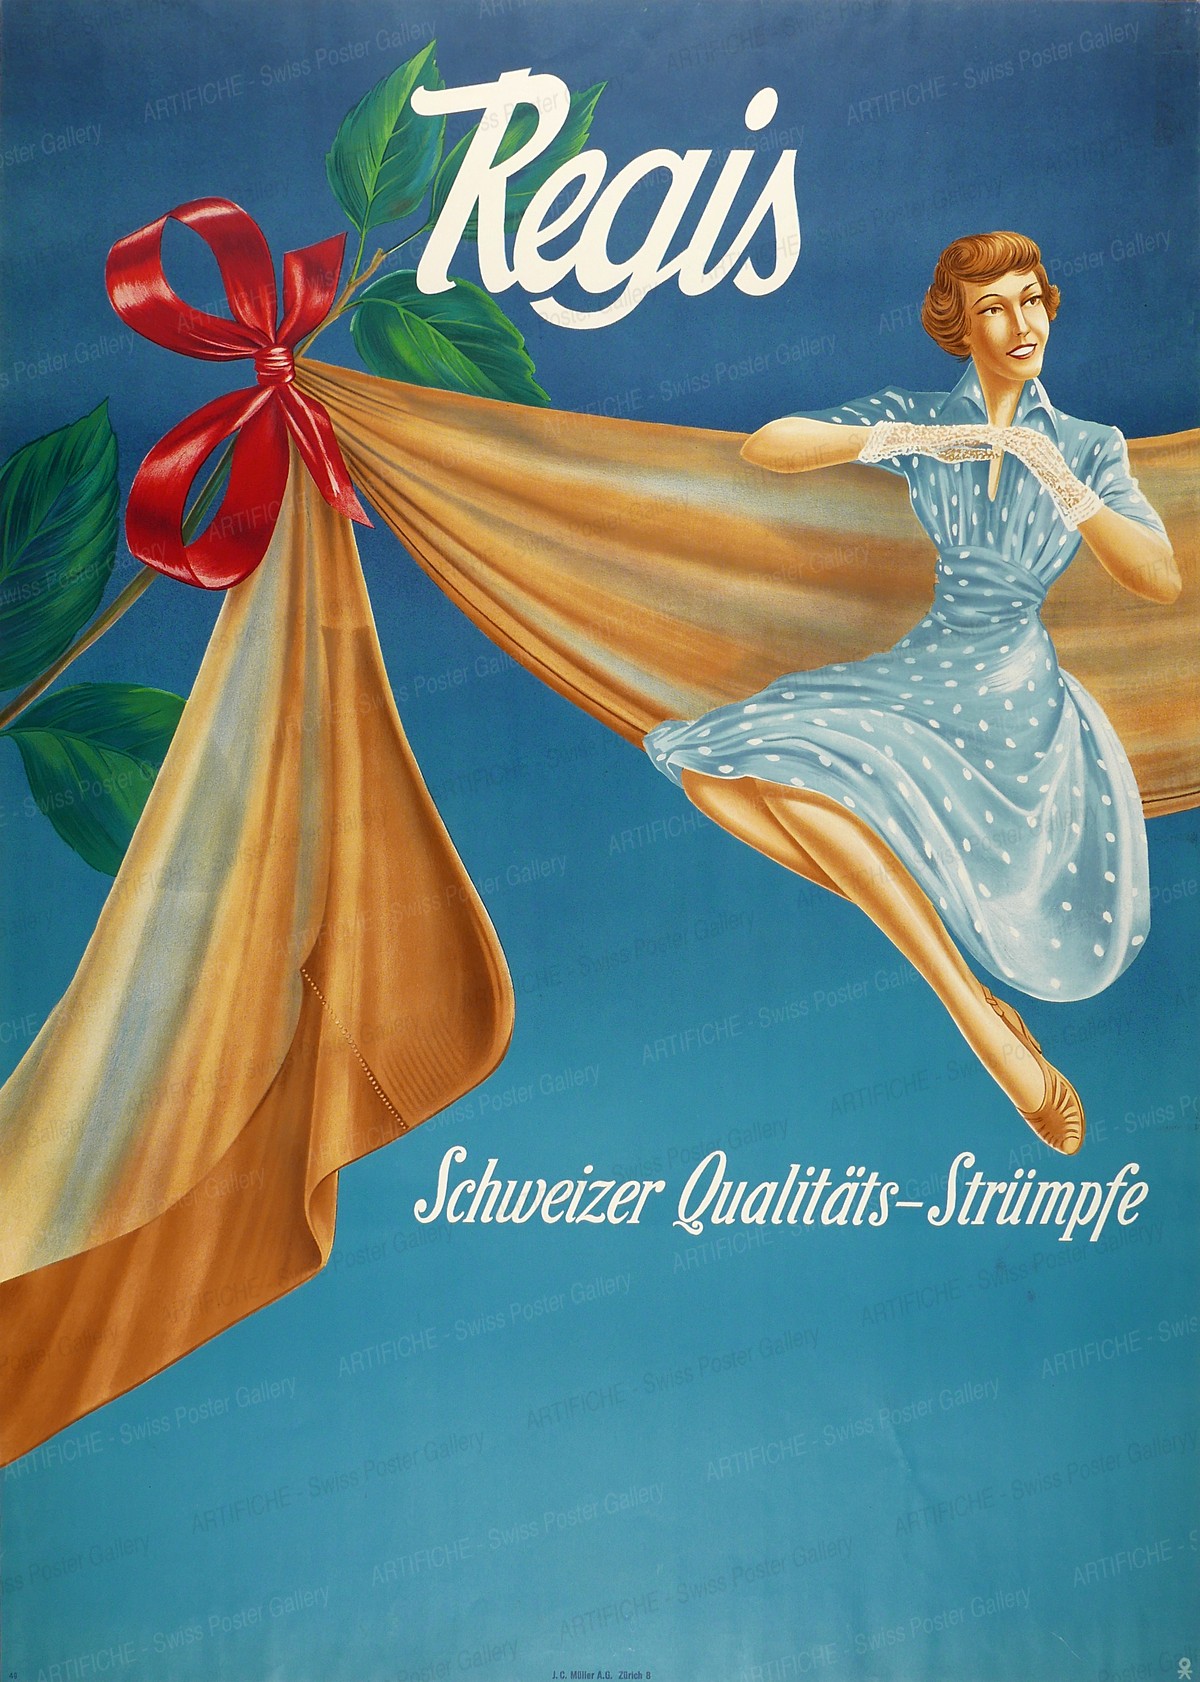 Regis – Swiss Quality stockings, O. Karl